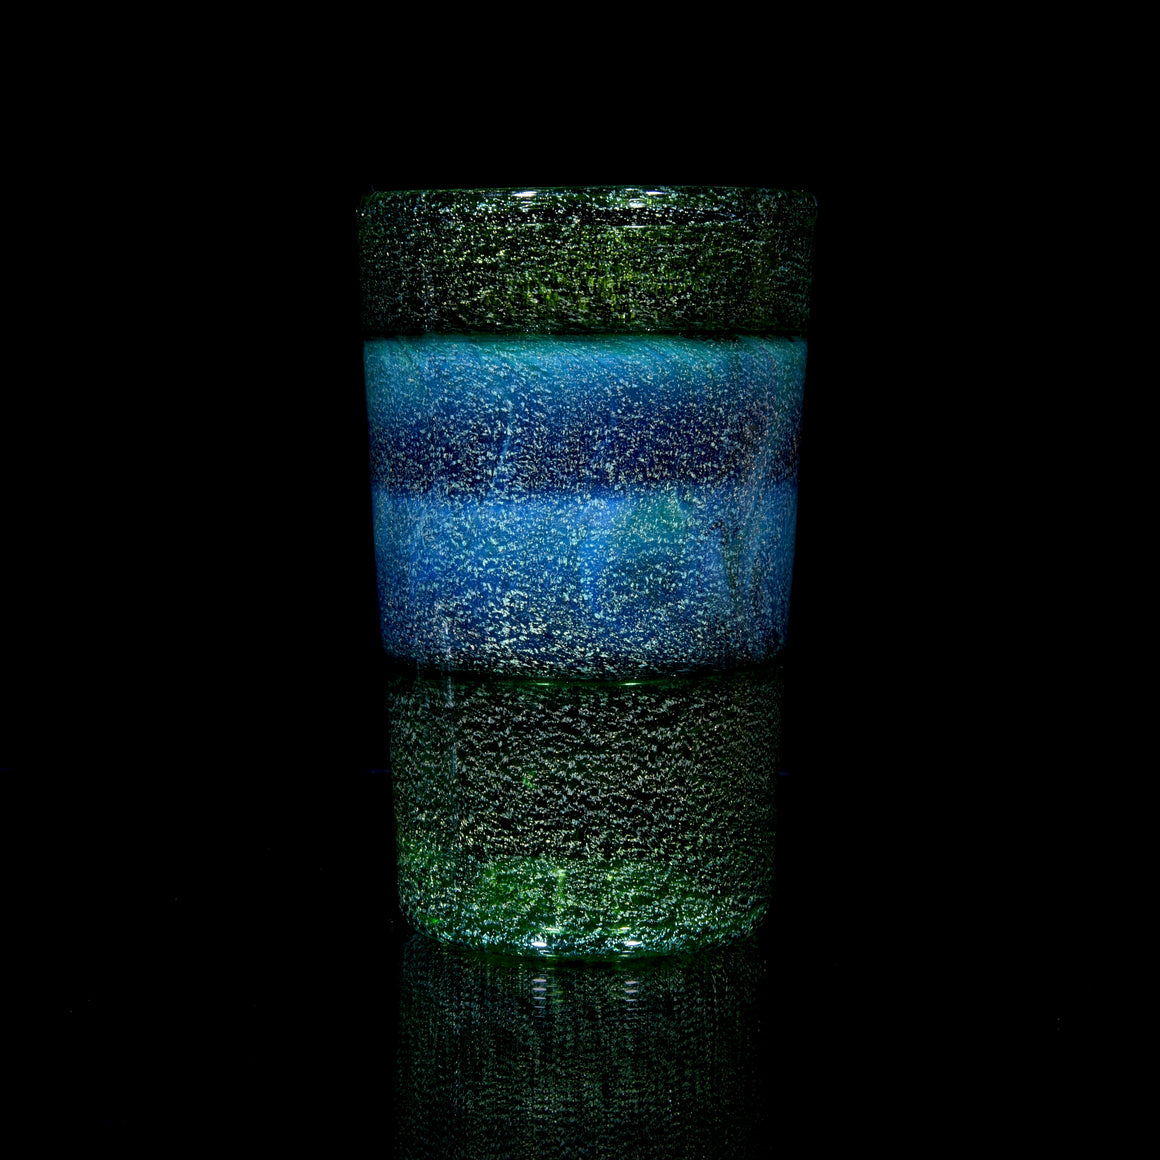 Dichroic Experimental Green Pint Glass